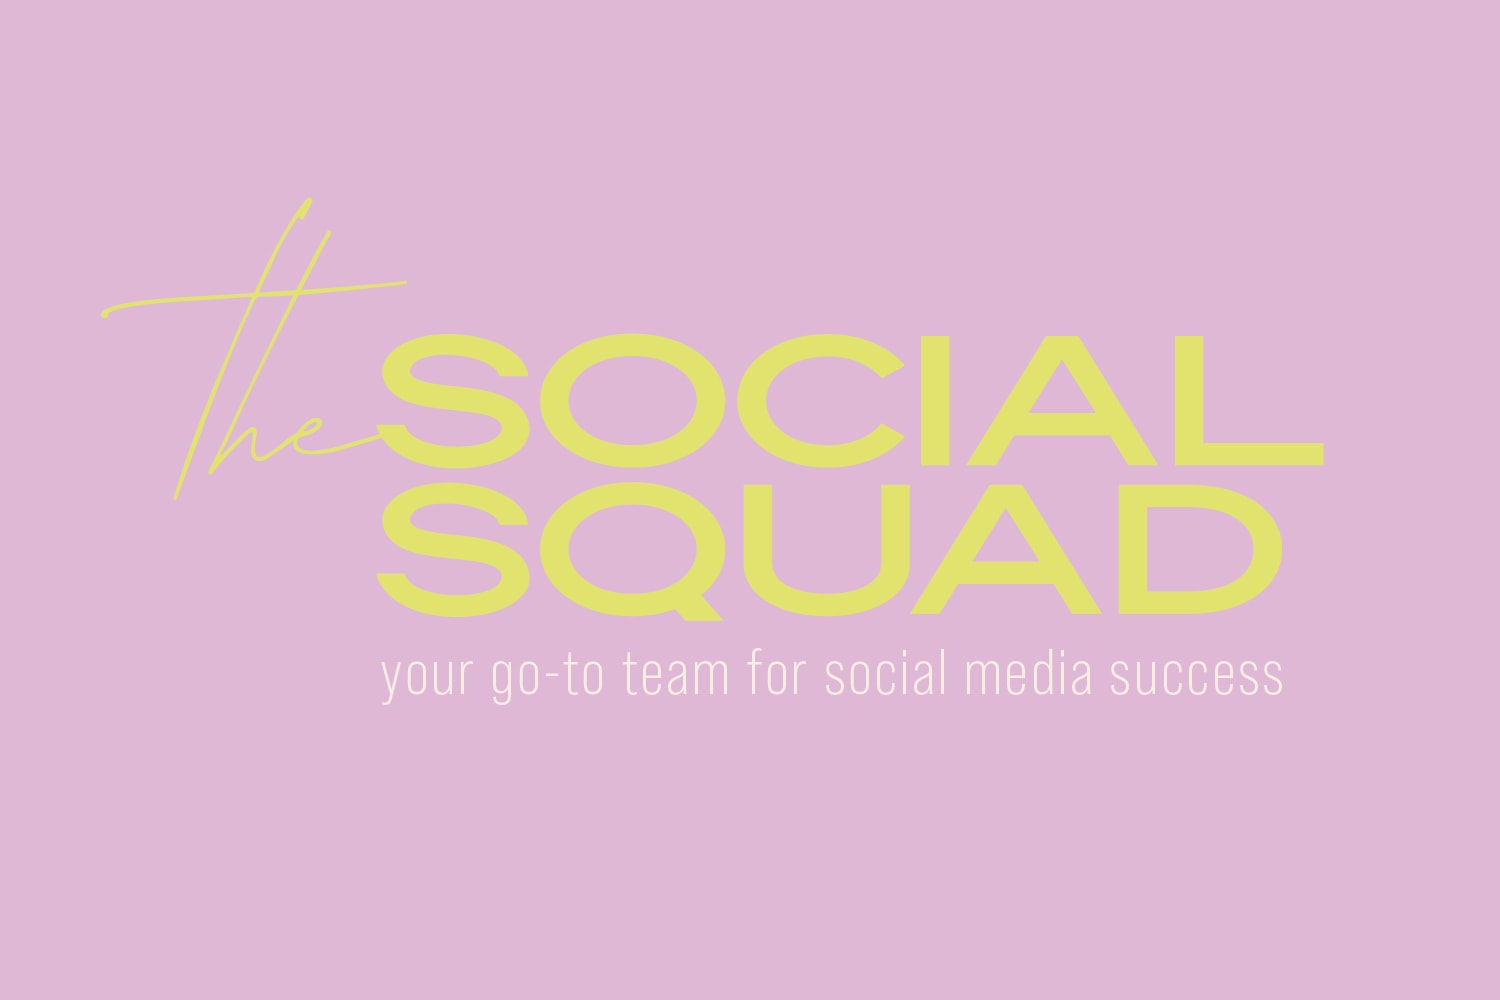 the social squad logo